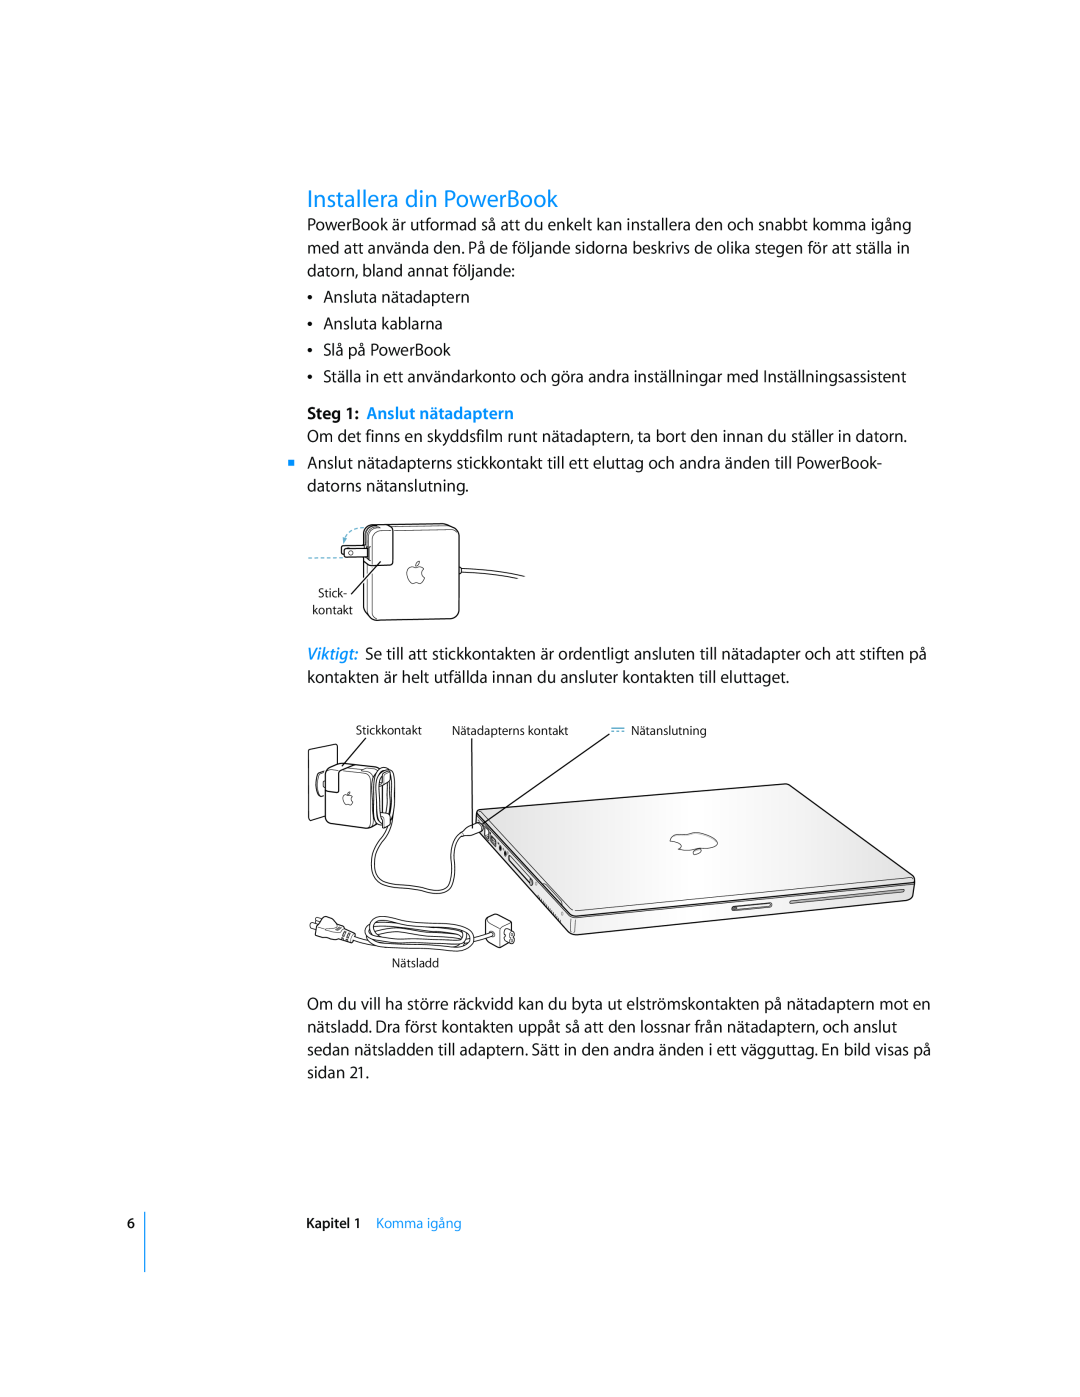 Apple G4 15-TUM manual Installera din PowerBook, Steg 1 Anslut nätadaptern 